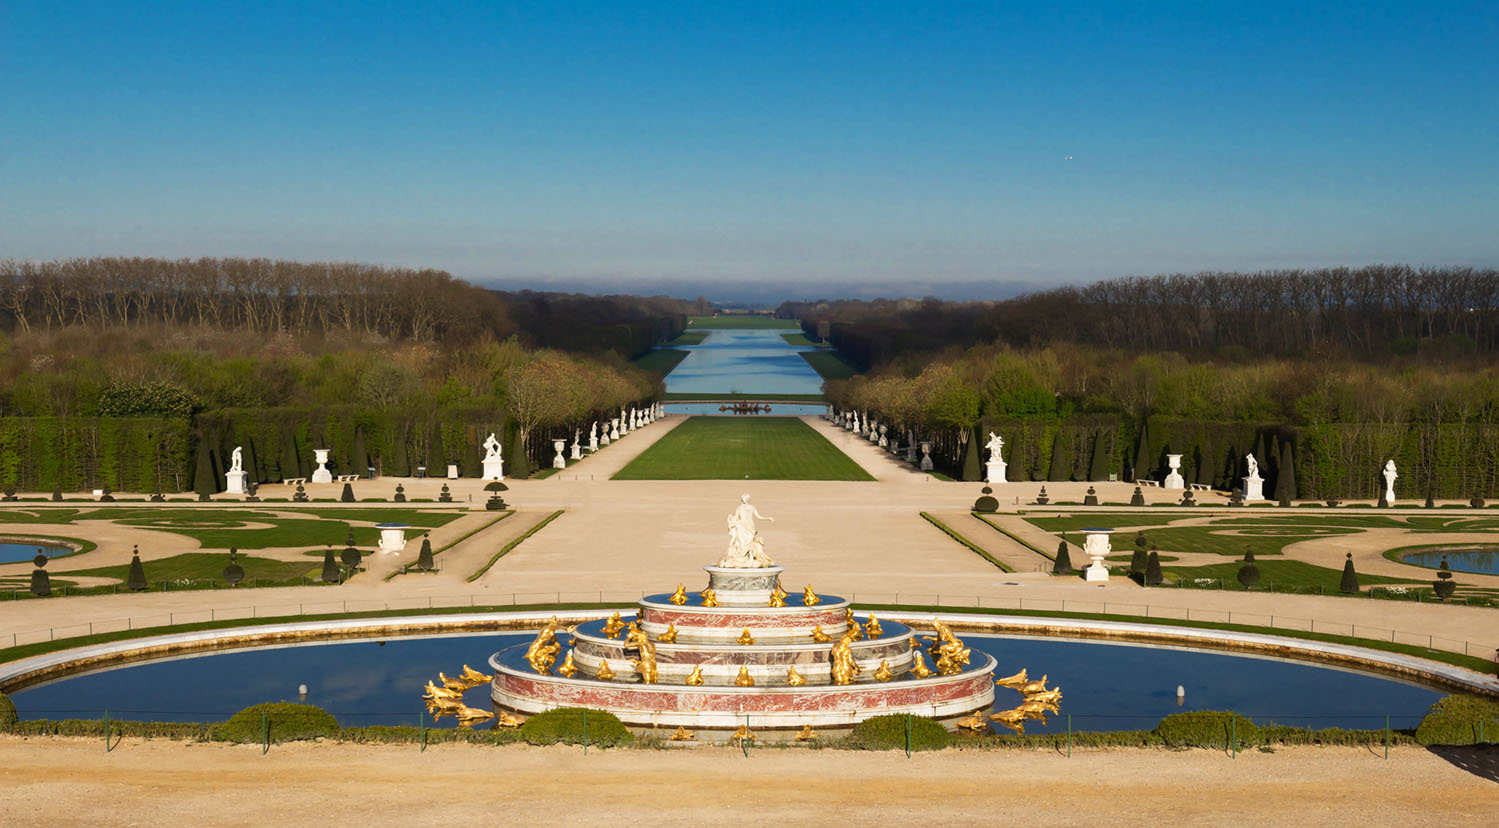 The Latona Fountain in the Garden of Versailles in France. The Garden of Versailles is on the UNESCO World Heritage List.